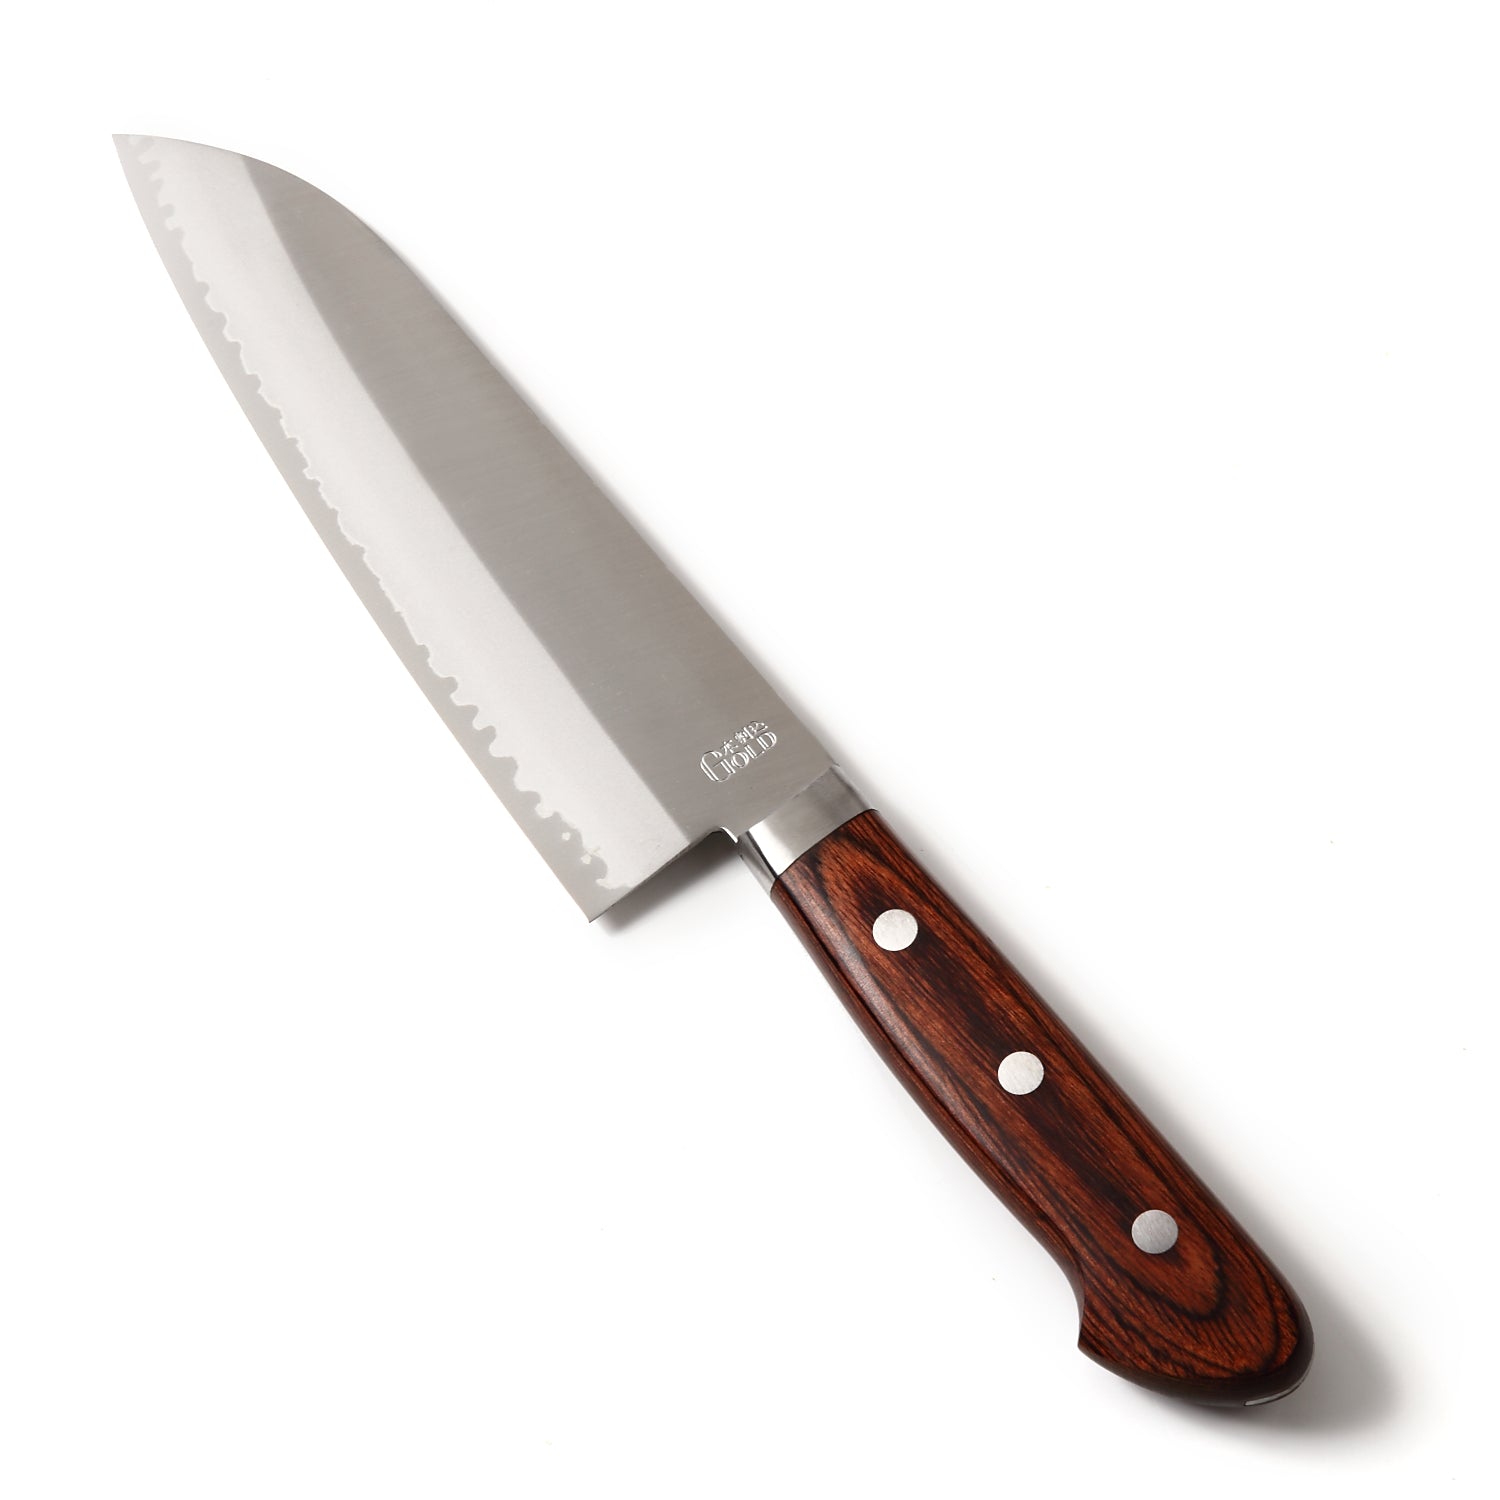 5-inch Utility Knife Multi-purpose